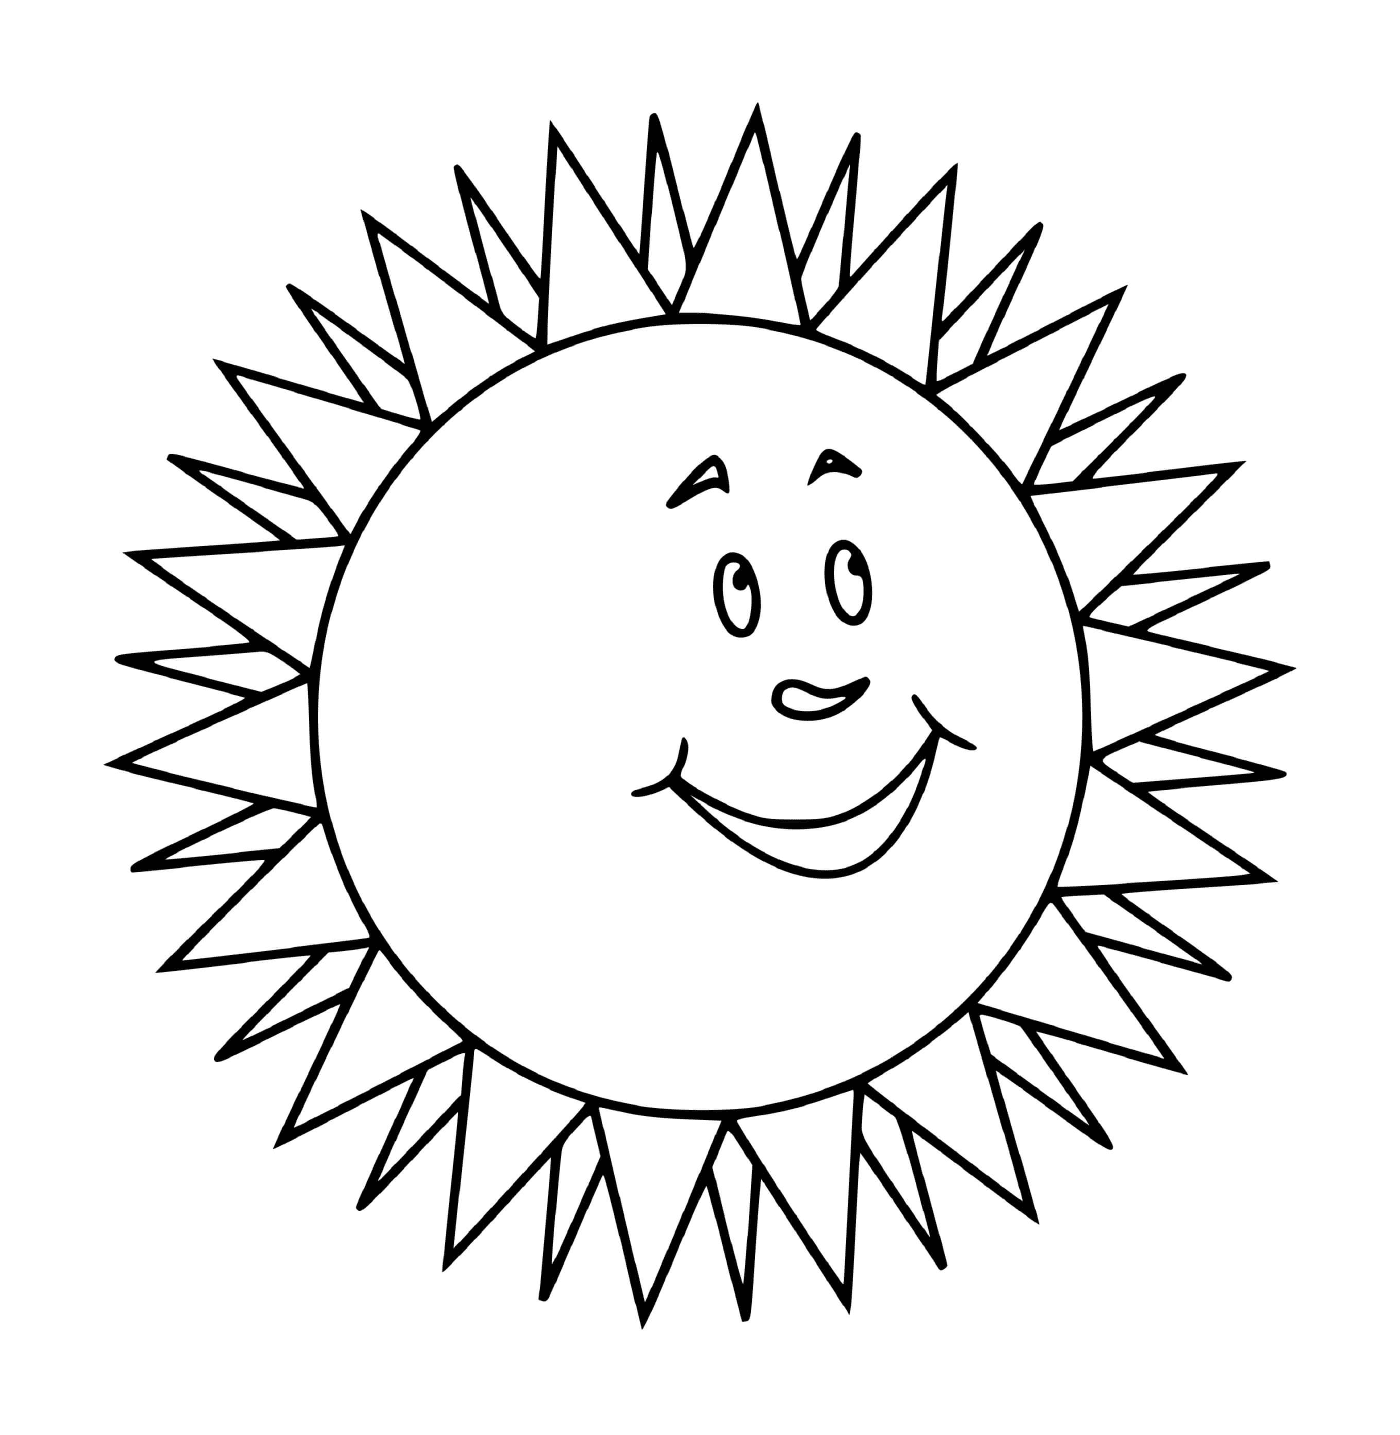  Smileing Sun with Radiation 